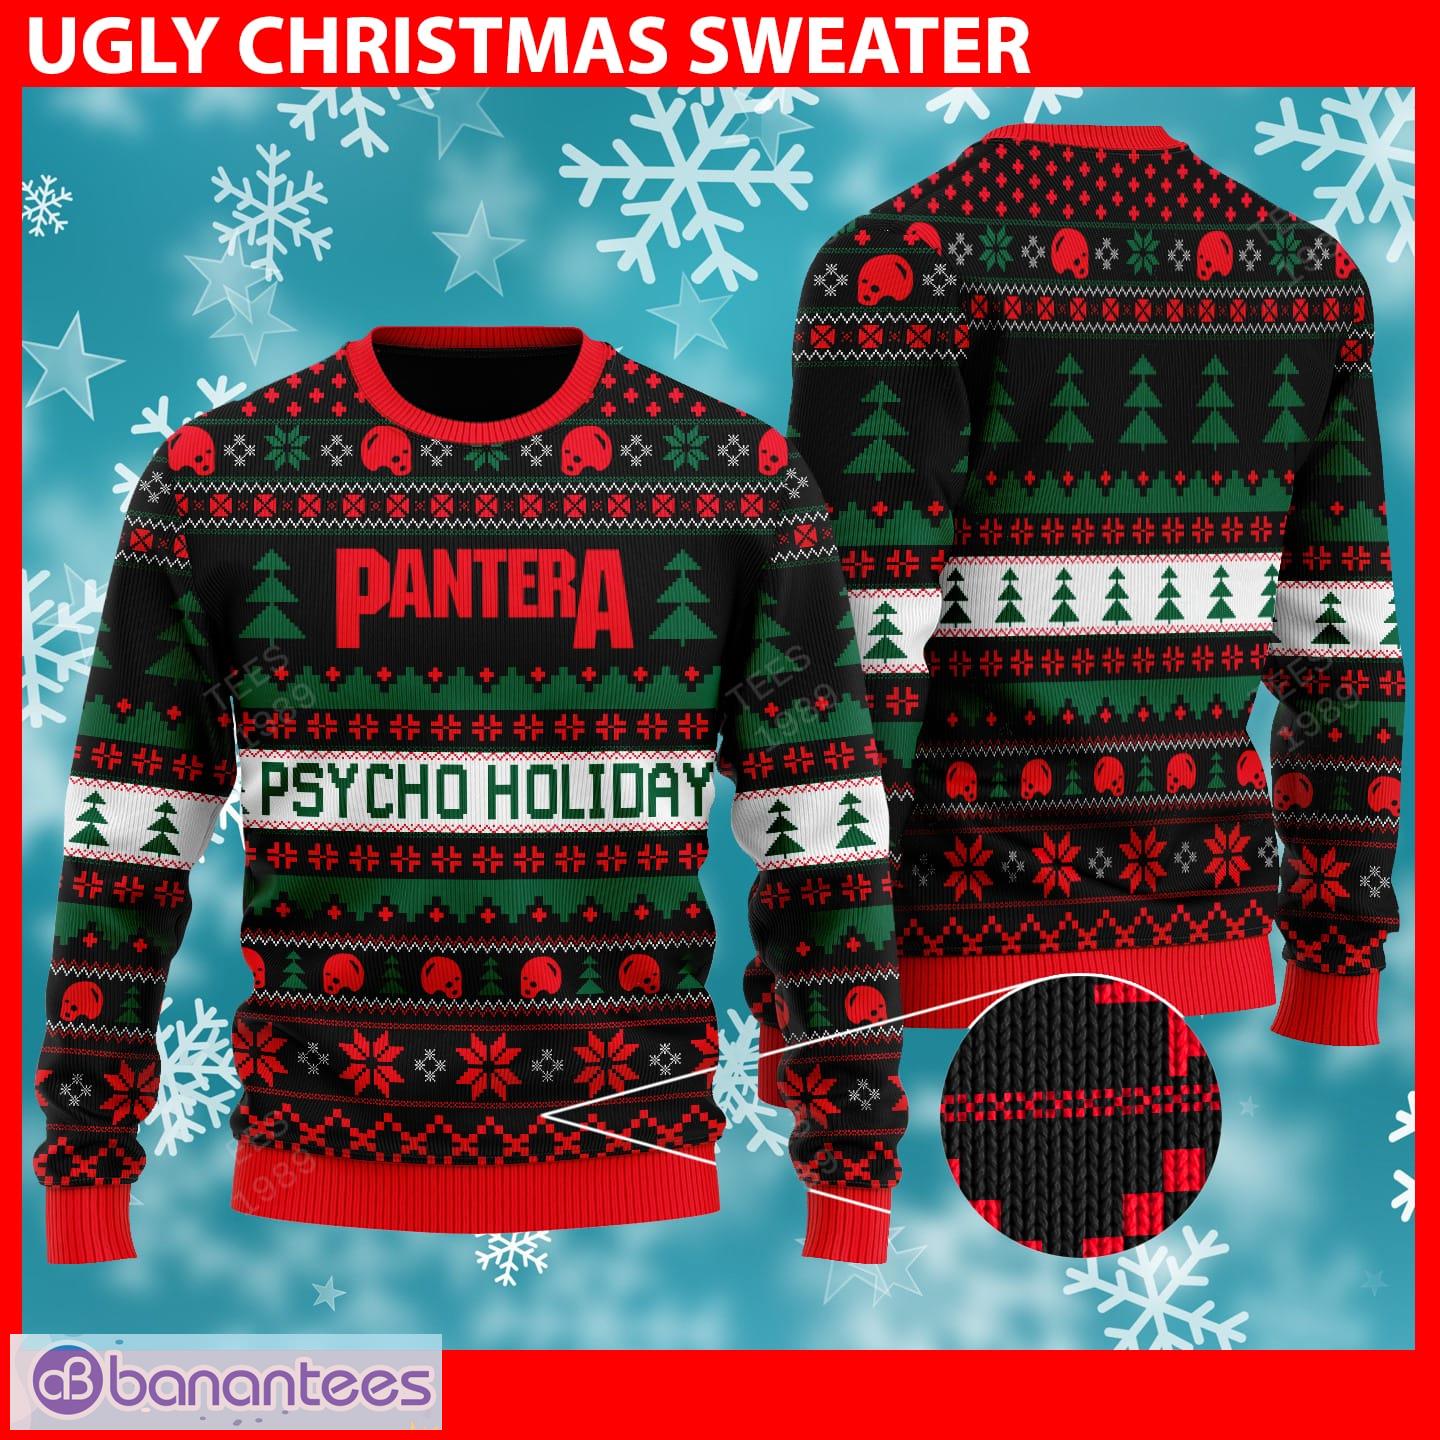 großartig Pantera Psycho Holidays Ugly 3D And Sweater For Banantees Christmas Men Women 